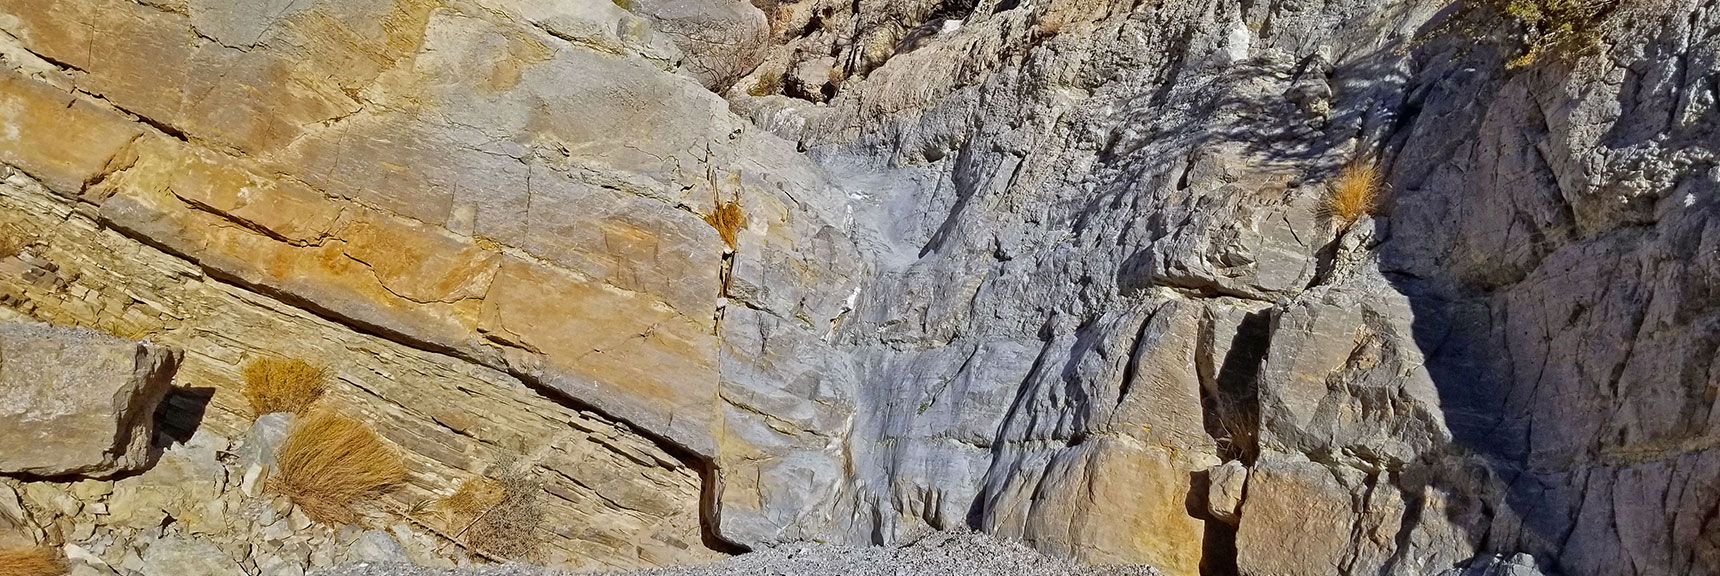 First Large Dry Waterfall to Climb in Gateway Canyon | Kraft Mountain, Gateway Canyon Loop, Calico Basin, Nevada